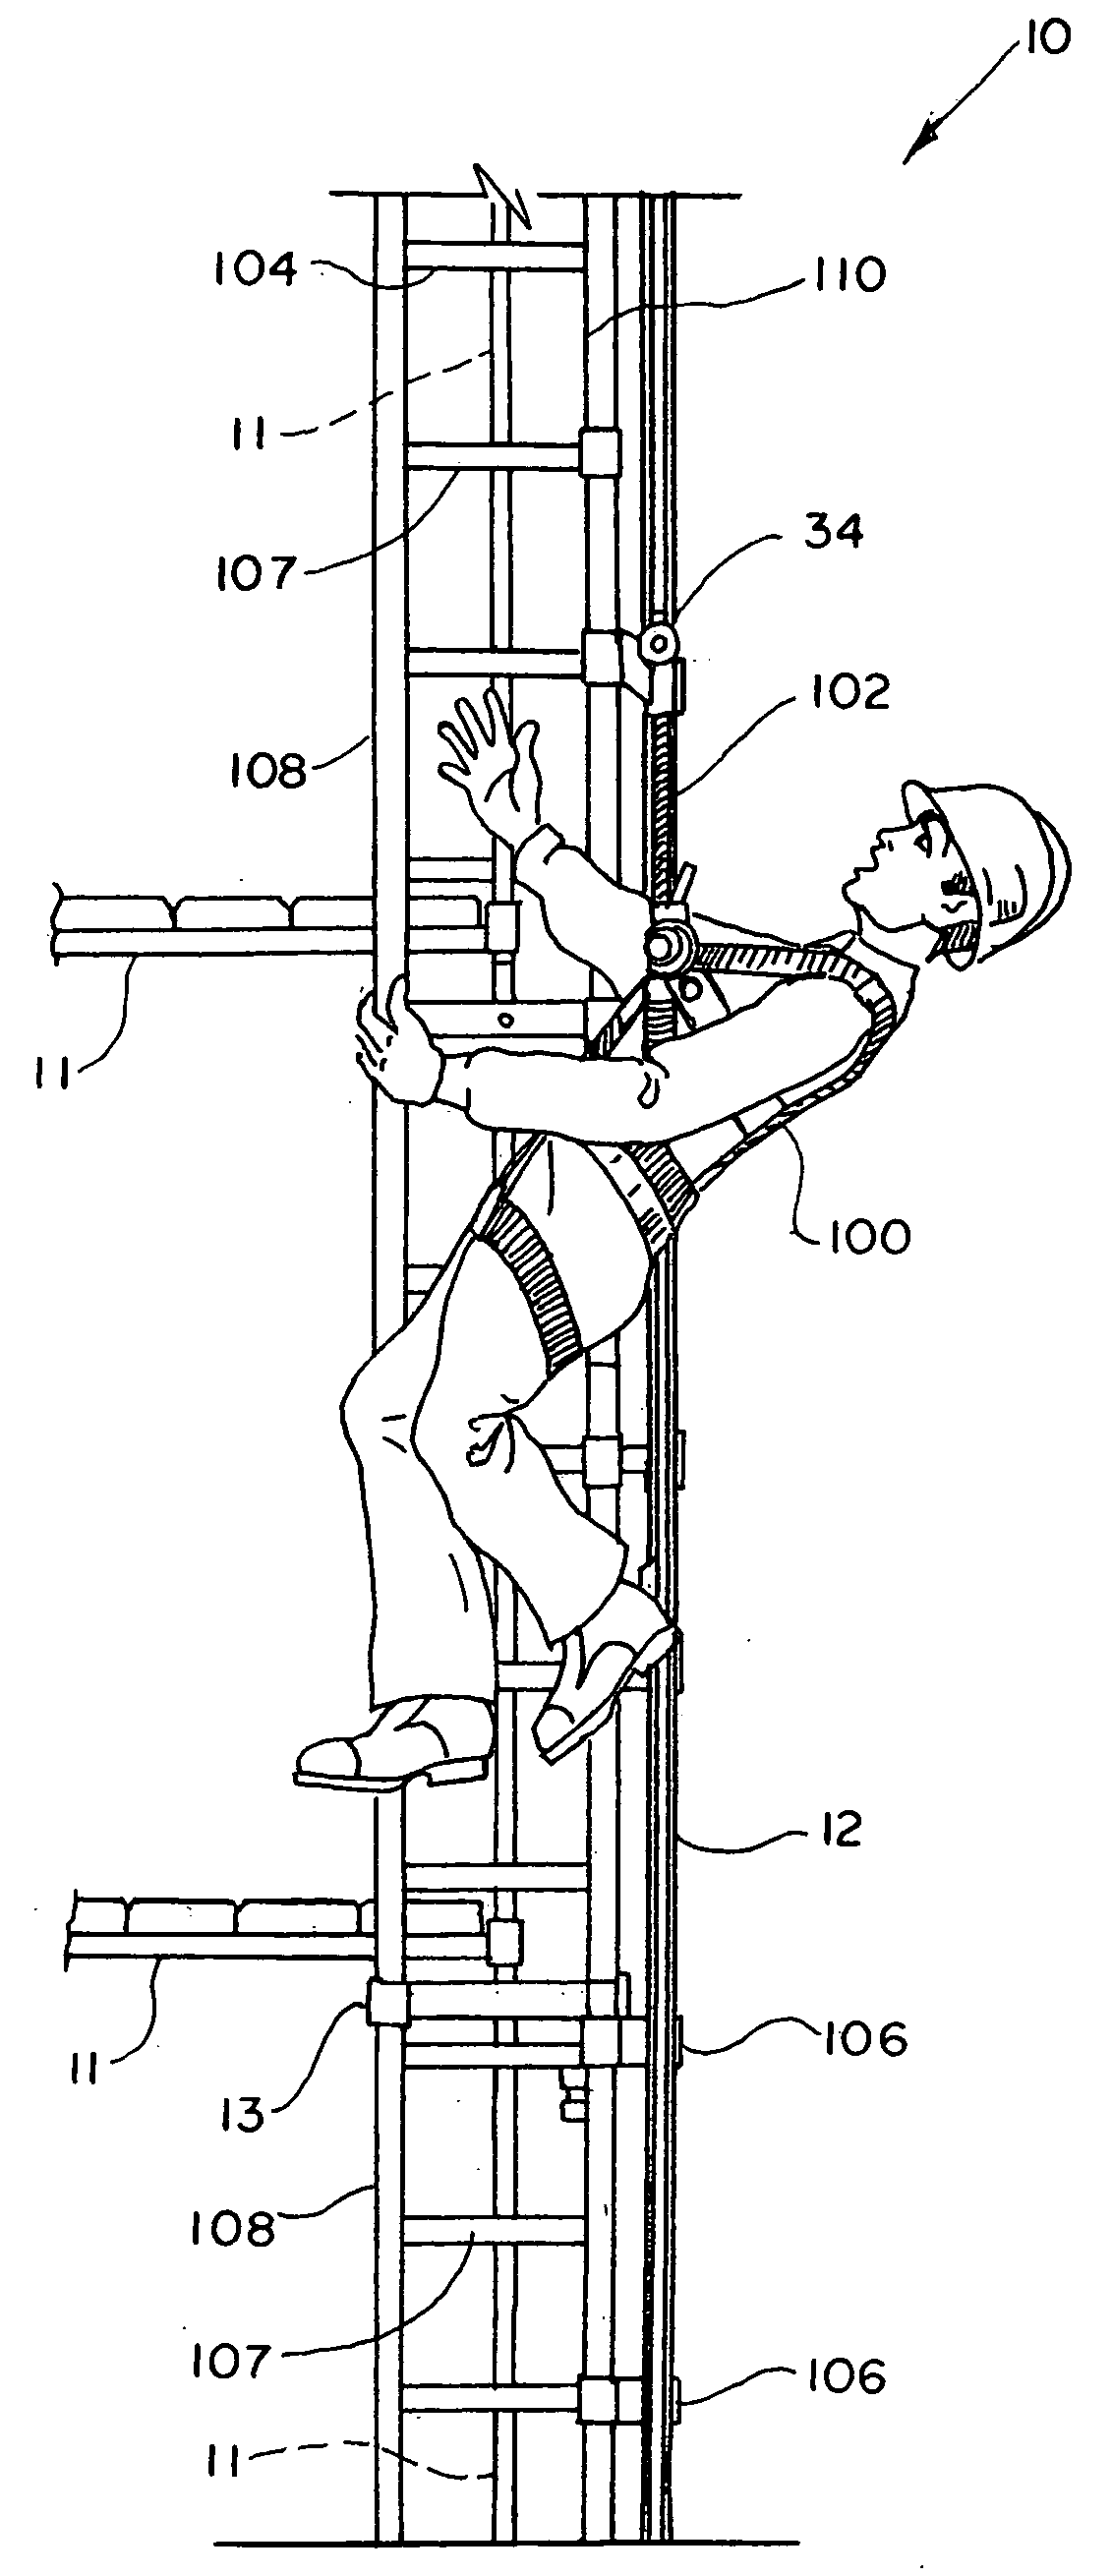 Ladder safety apparatus